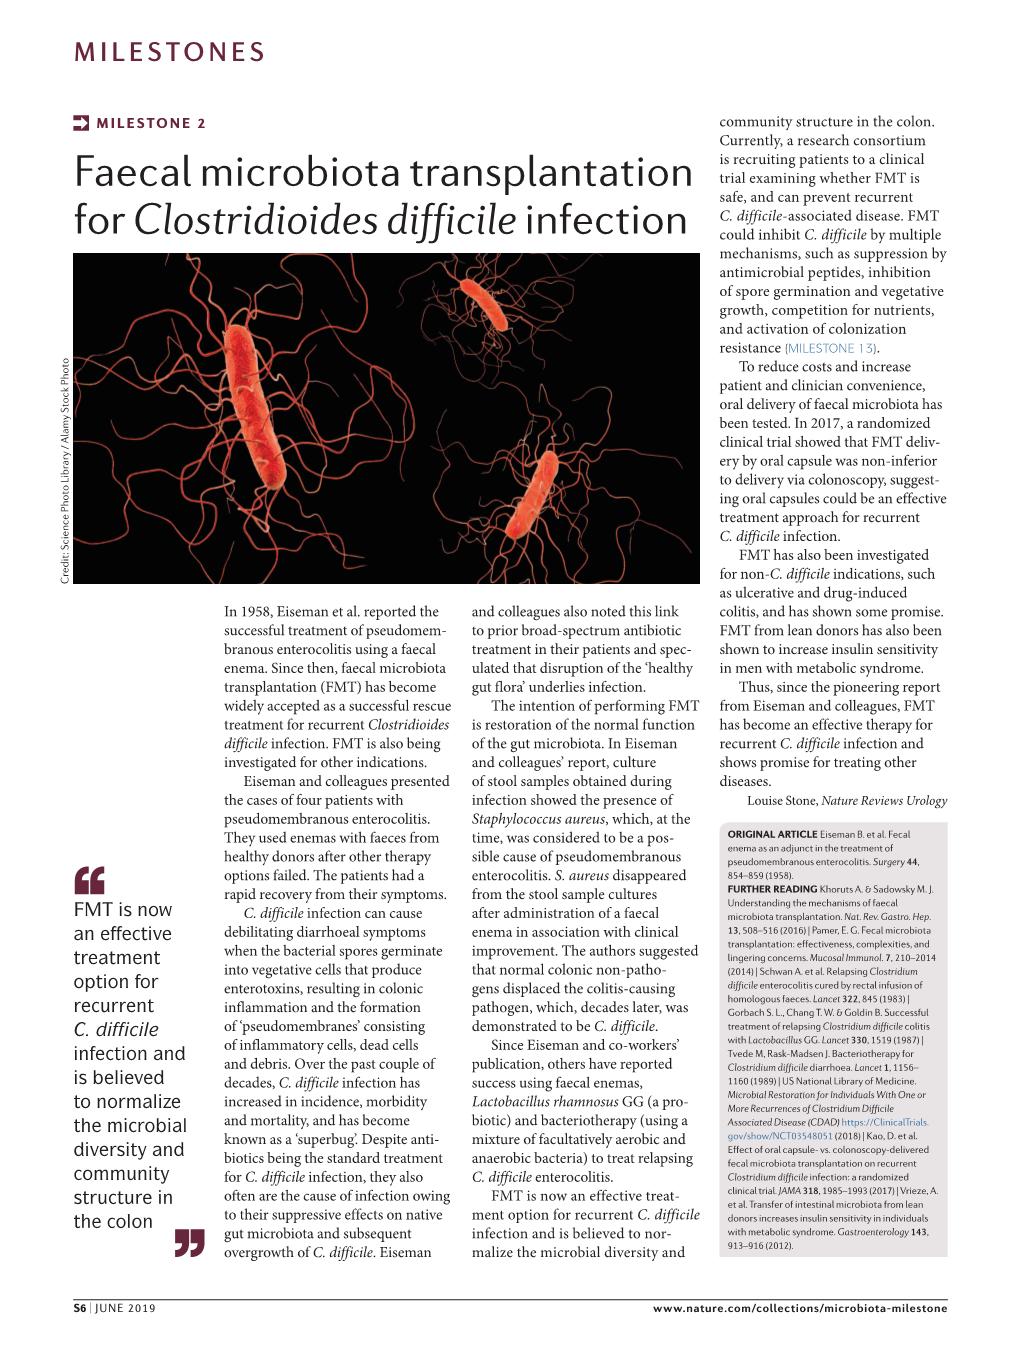 Faecal Microbiota Transplantation for Clostridioides Difficileinfection